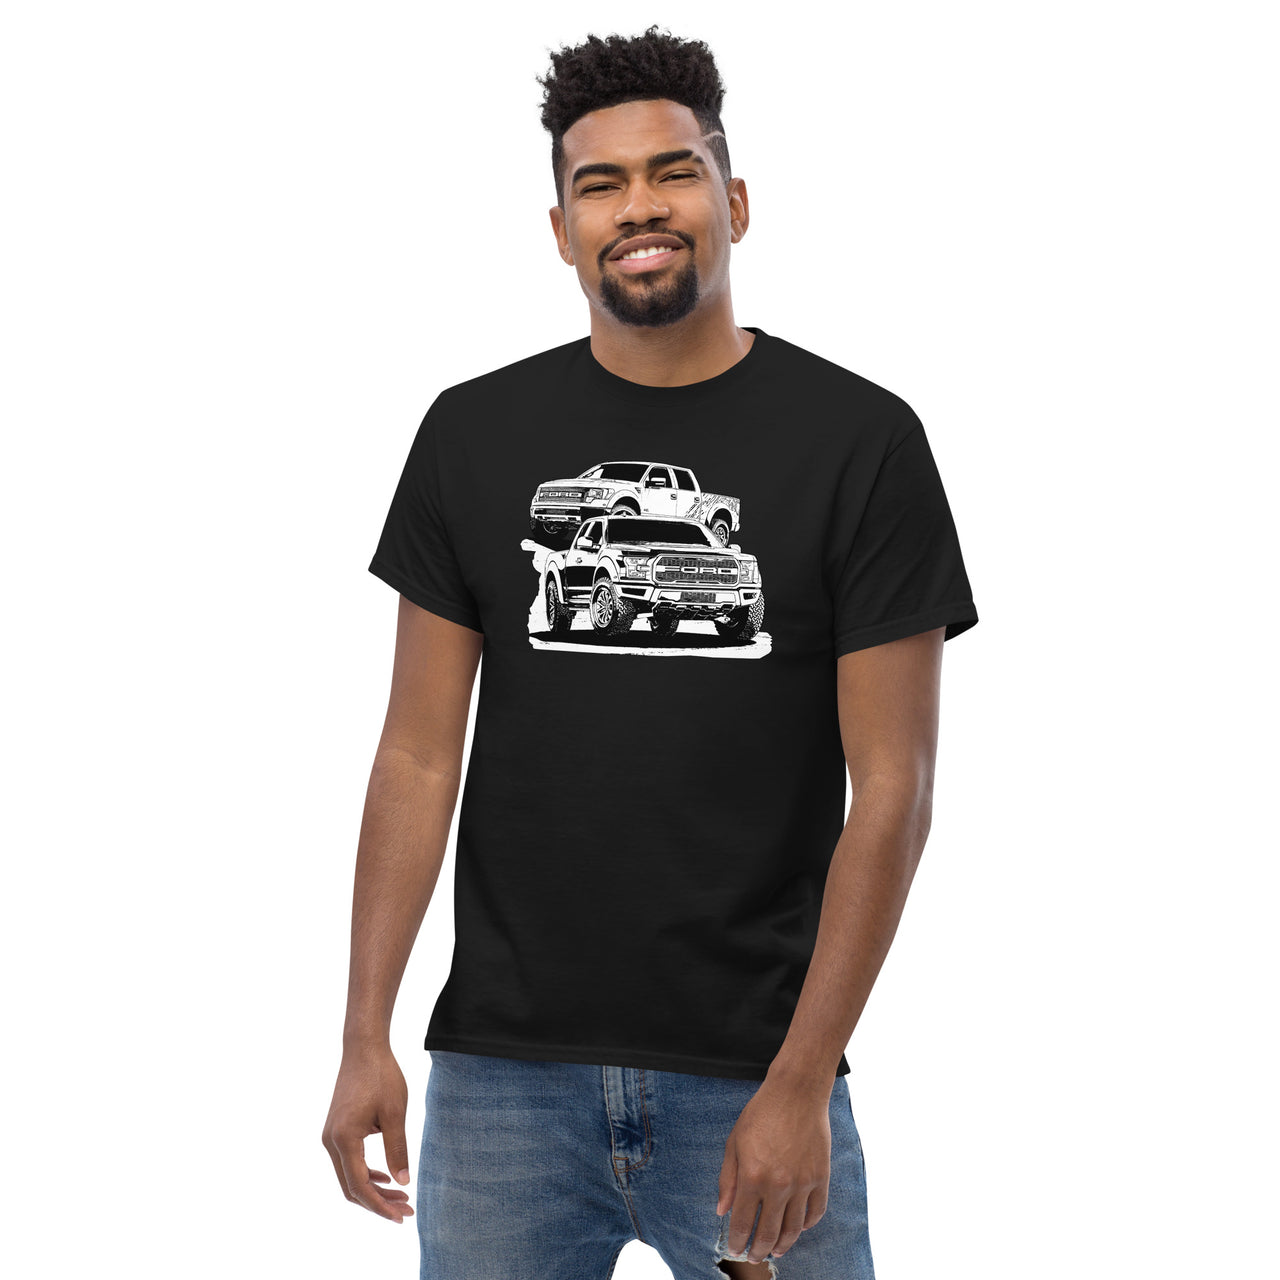 Raptor Truck T-Shirt modeled in black